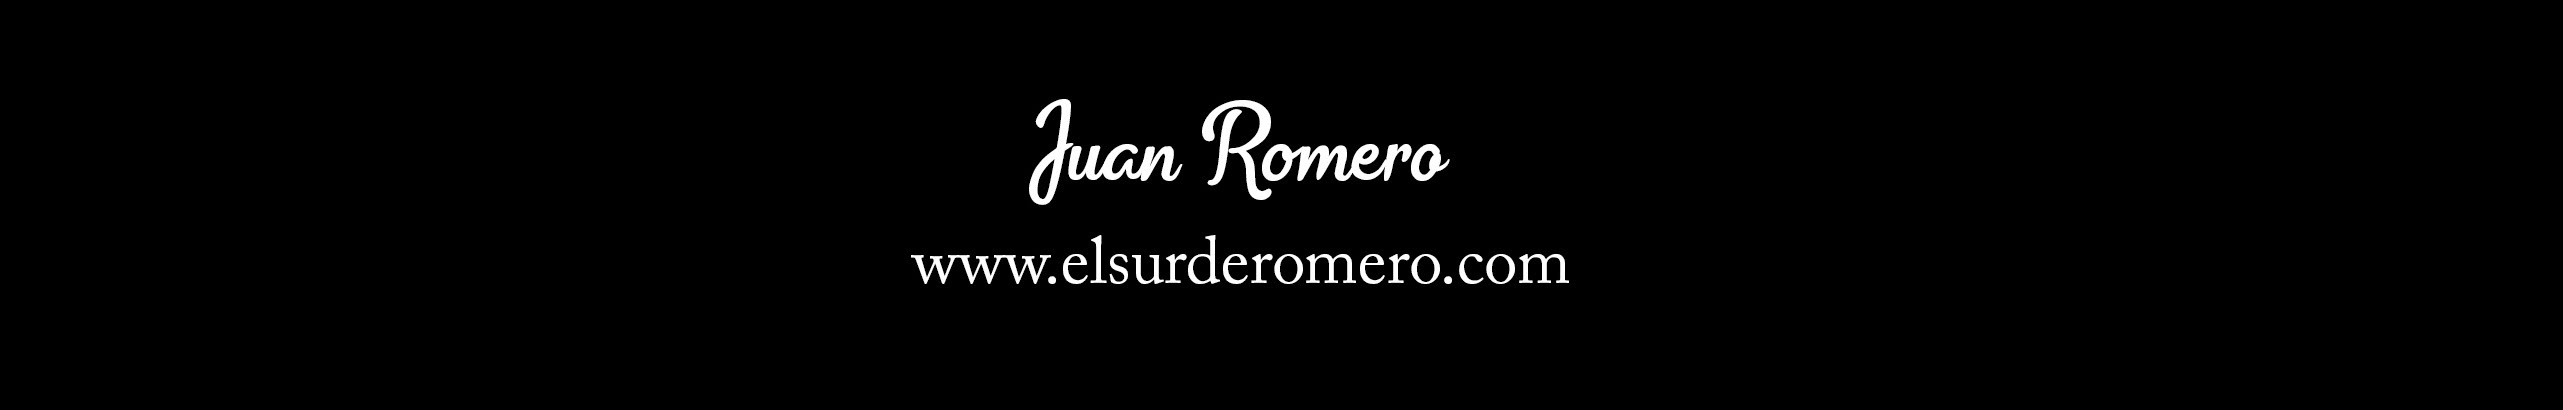 Juan Romero's profile banner